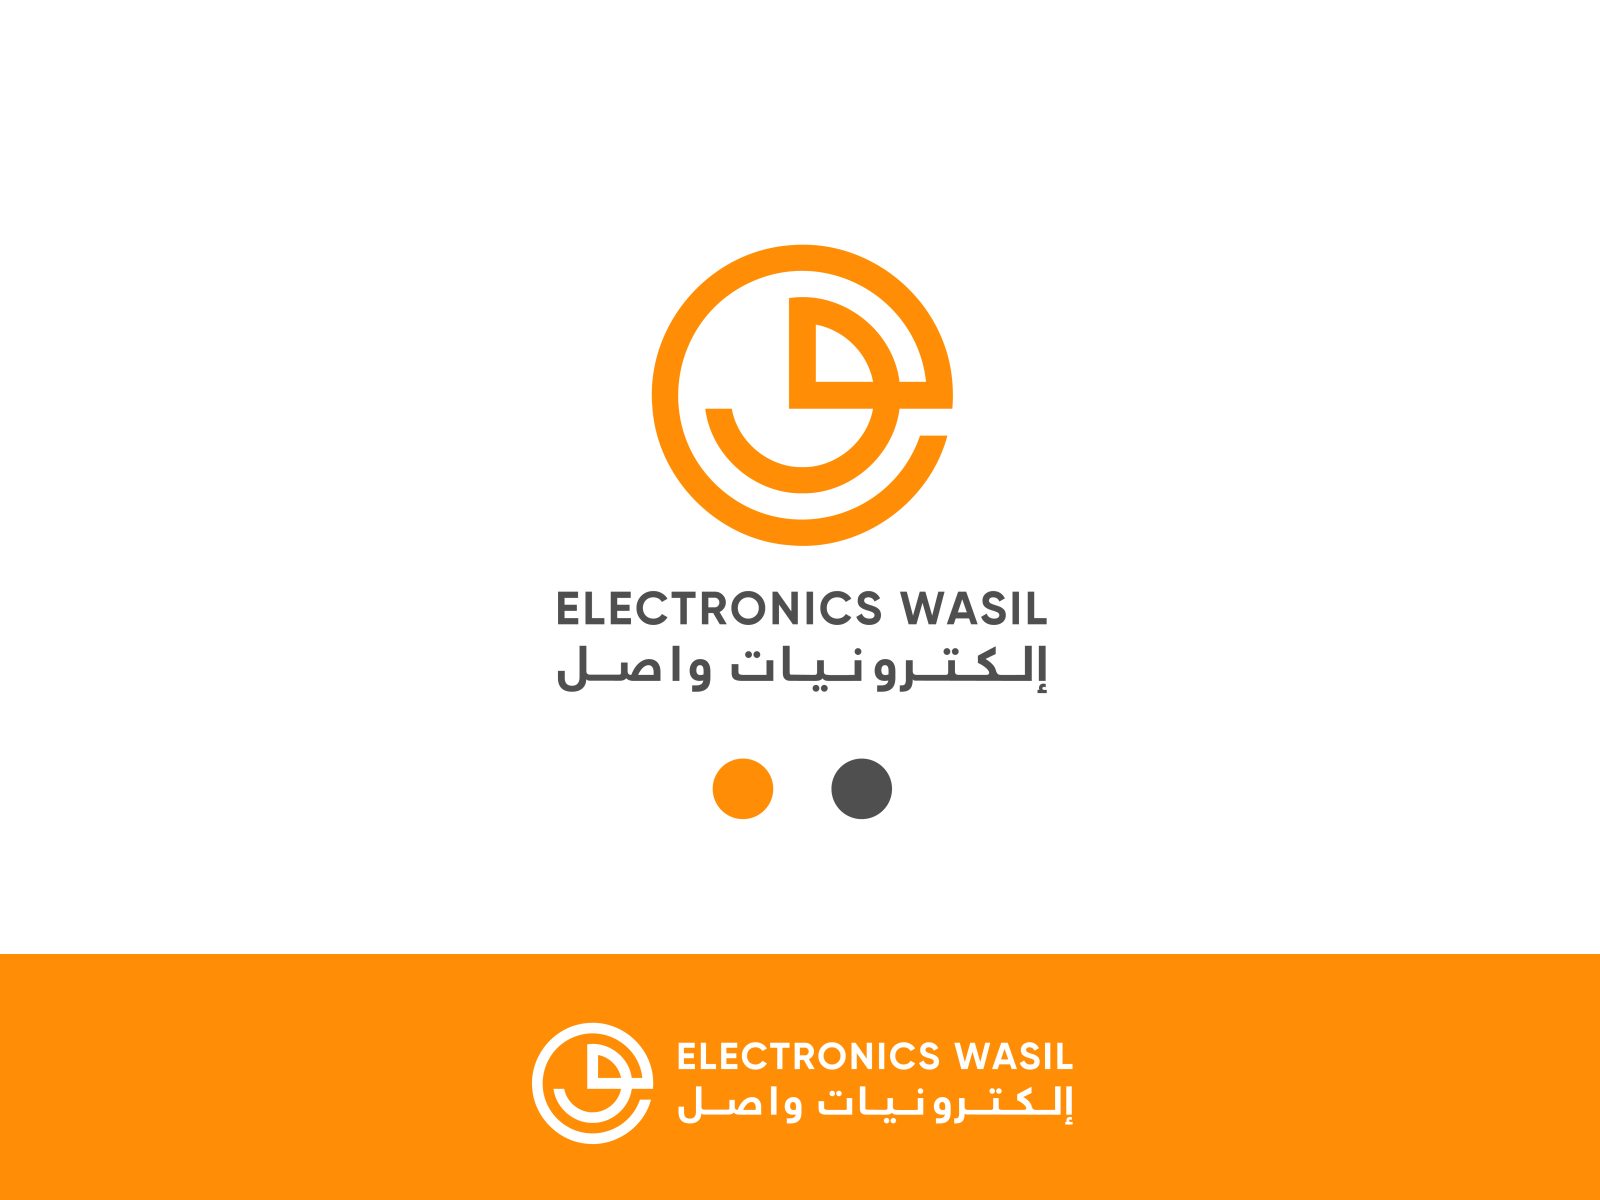 Mark&Advert - Prince Electronics logo completed Logo designing just in  2500Rs #logo #logodesign #logodesigns #logos #logoideas #companylogo  #logowork #logocompany #bestdesigns #graphics #designs | Facebook